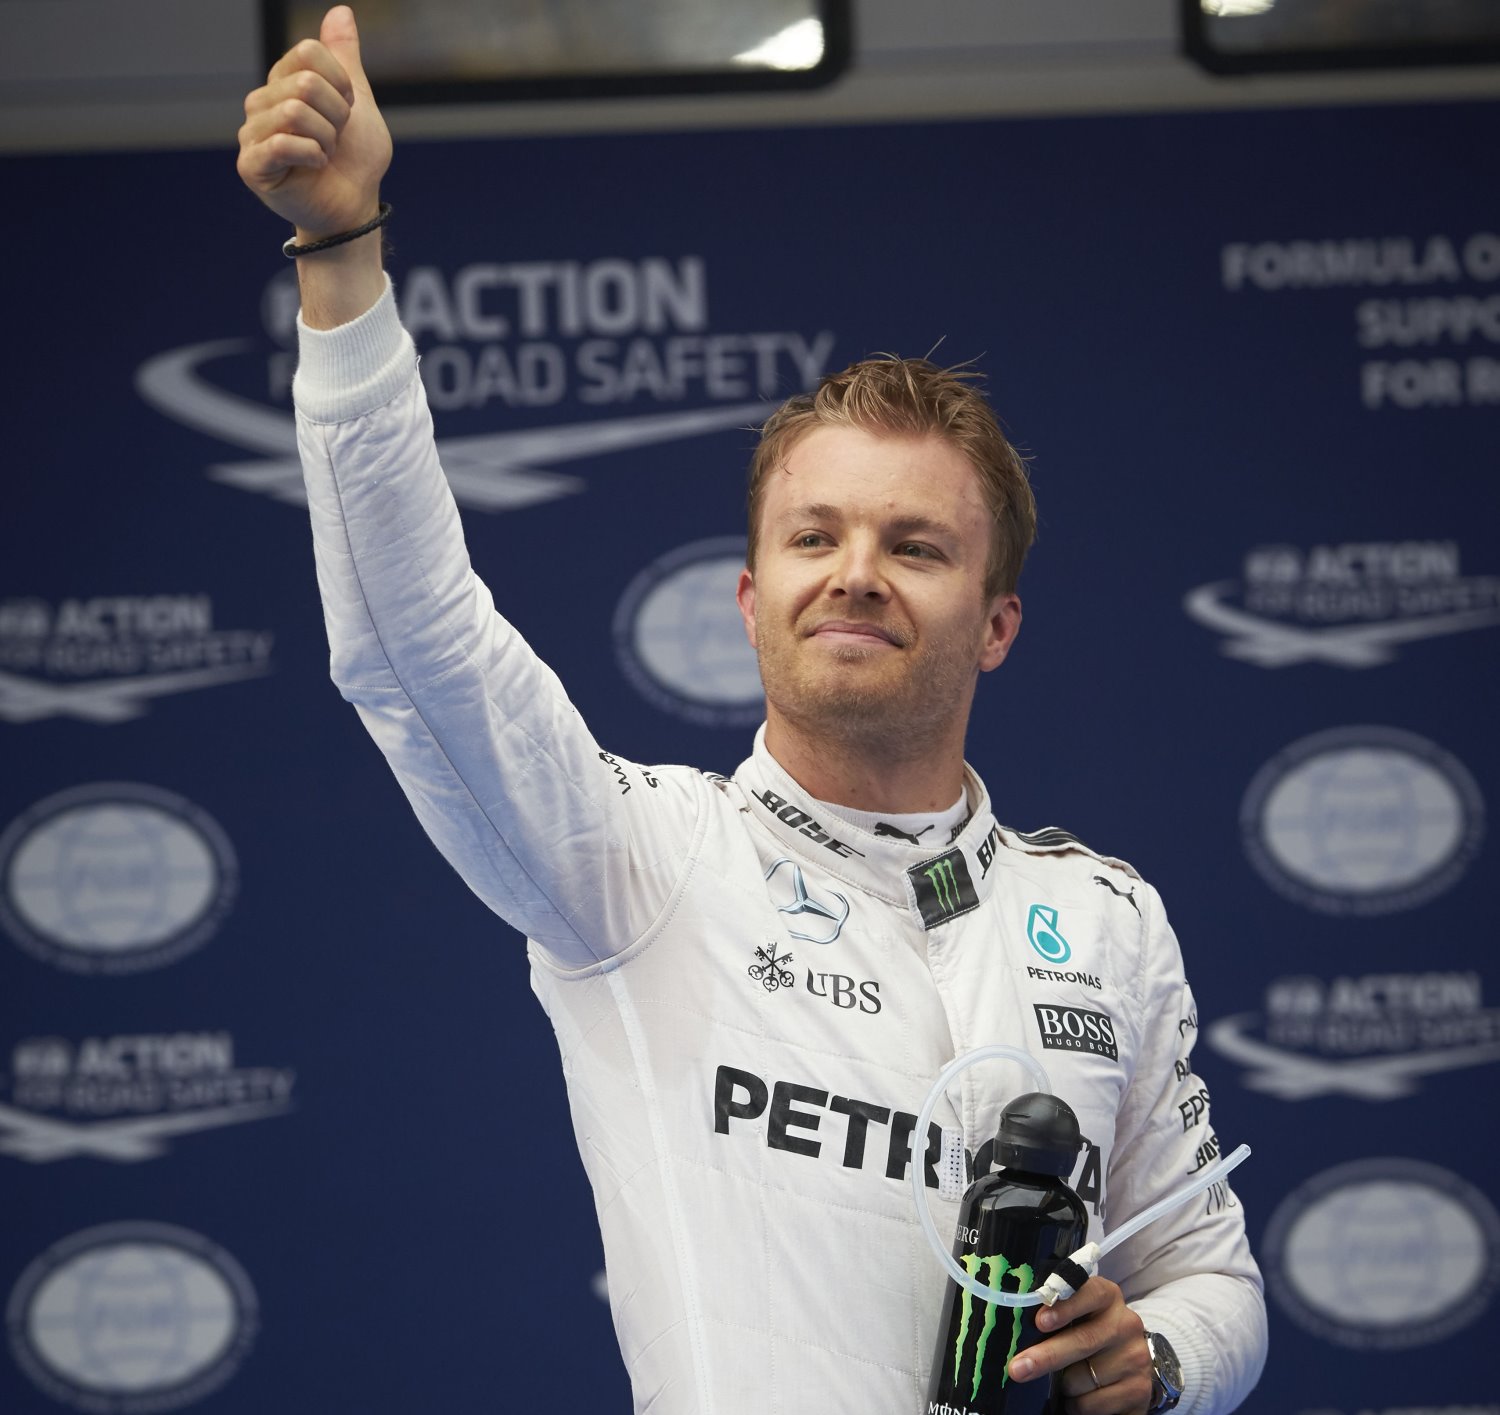 Rosberg has six wins in a row